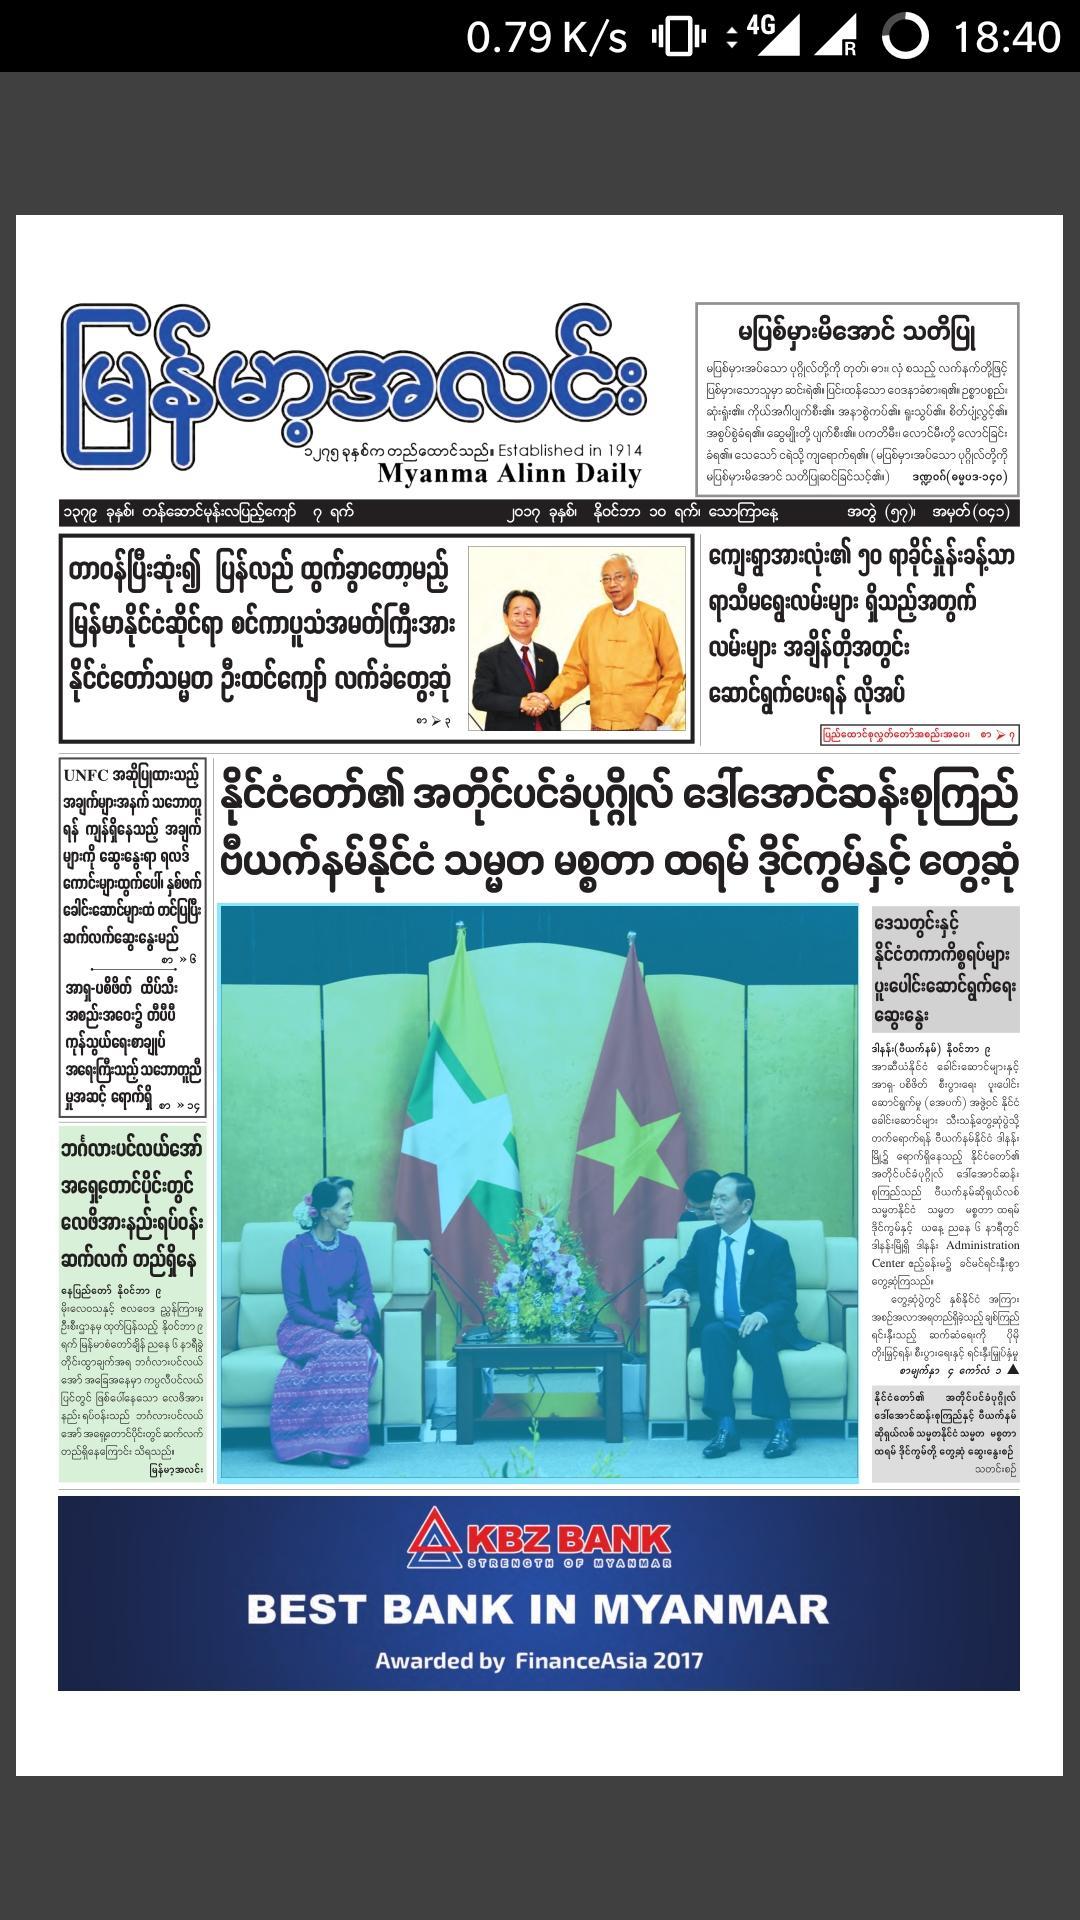 Myanmar Digital News For Android Apk Download